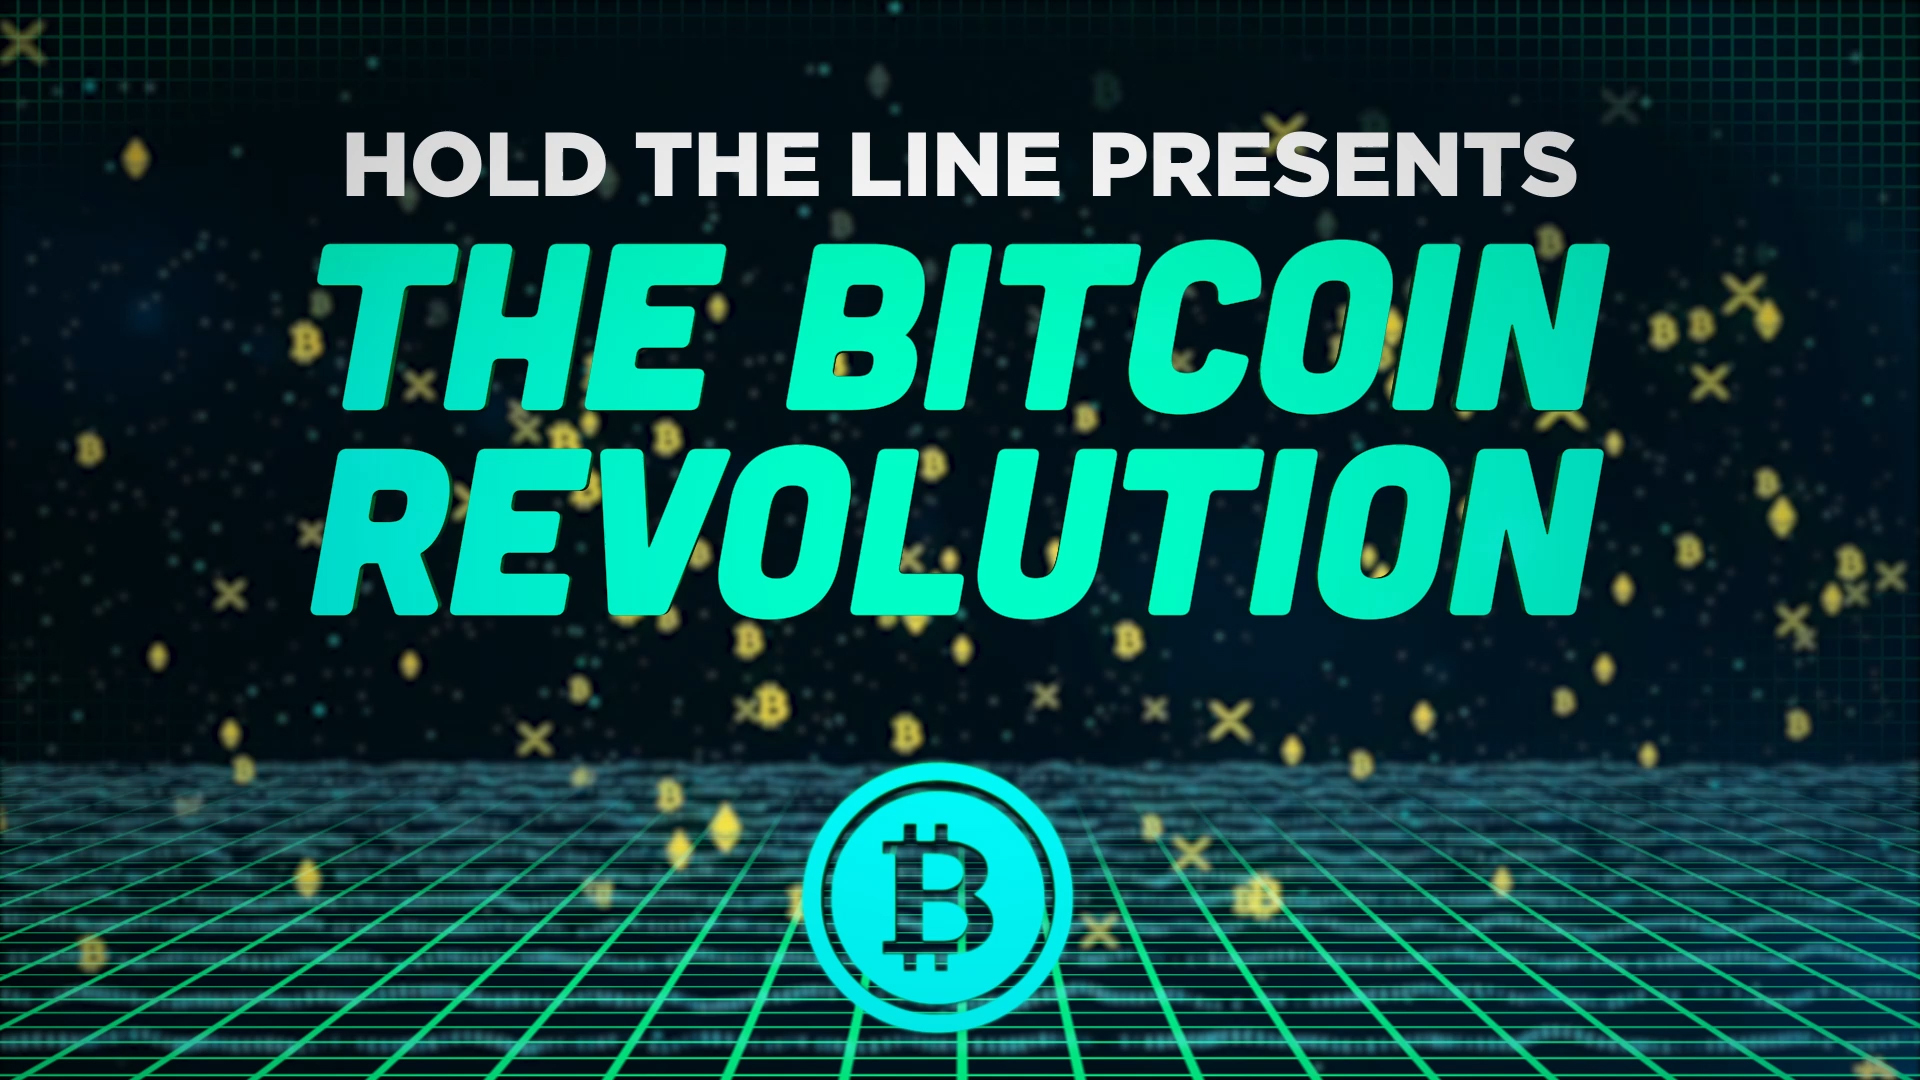 bitcoin revolution bluff